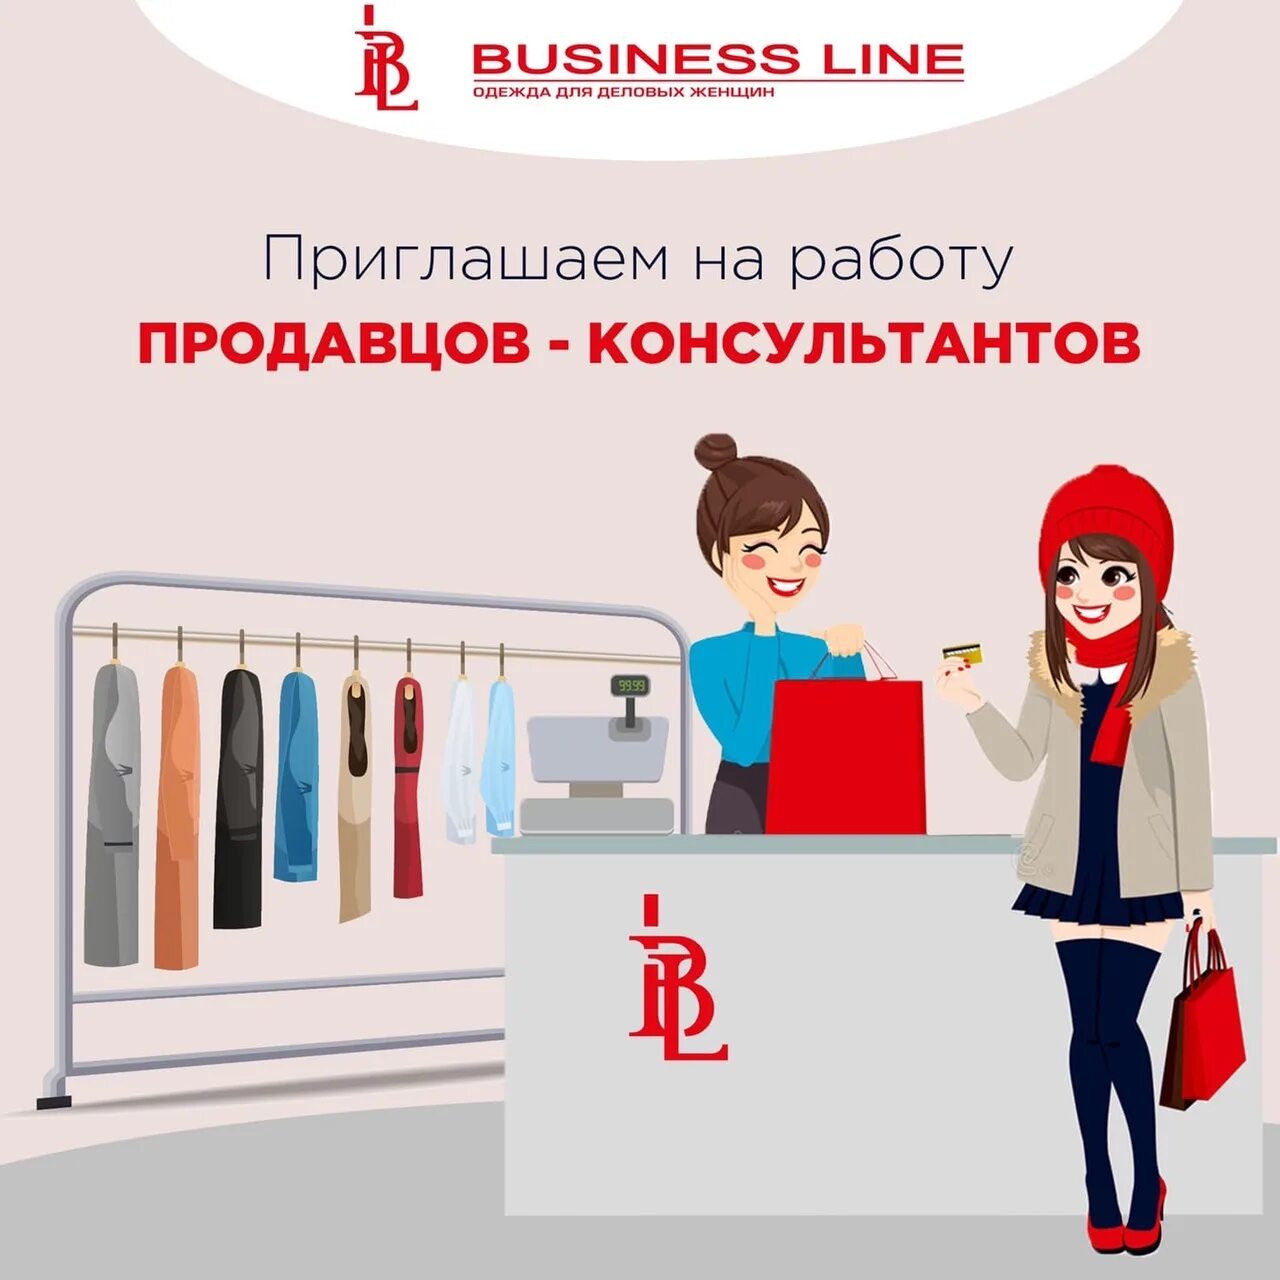 Бизнес лайн ульяновск. Бизнес лайн одежда интернет магазин. Business line одежда каталог. Business line женская одежда интернет магазин.